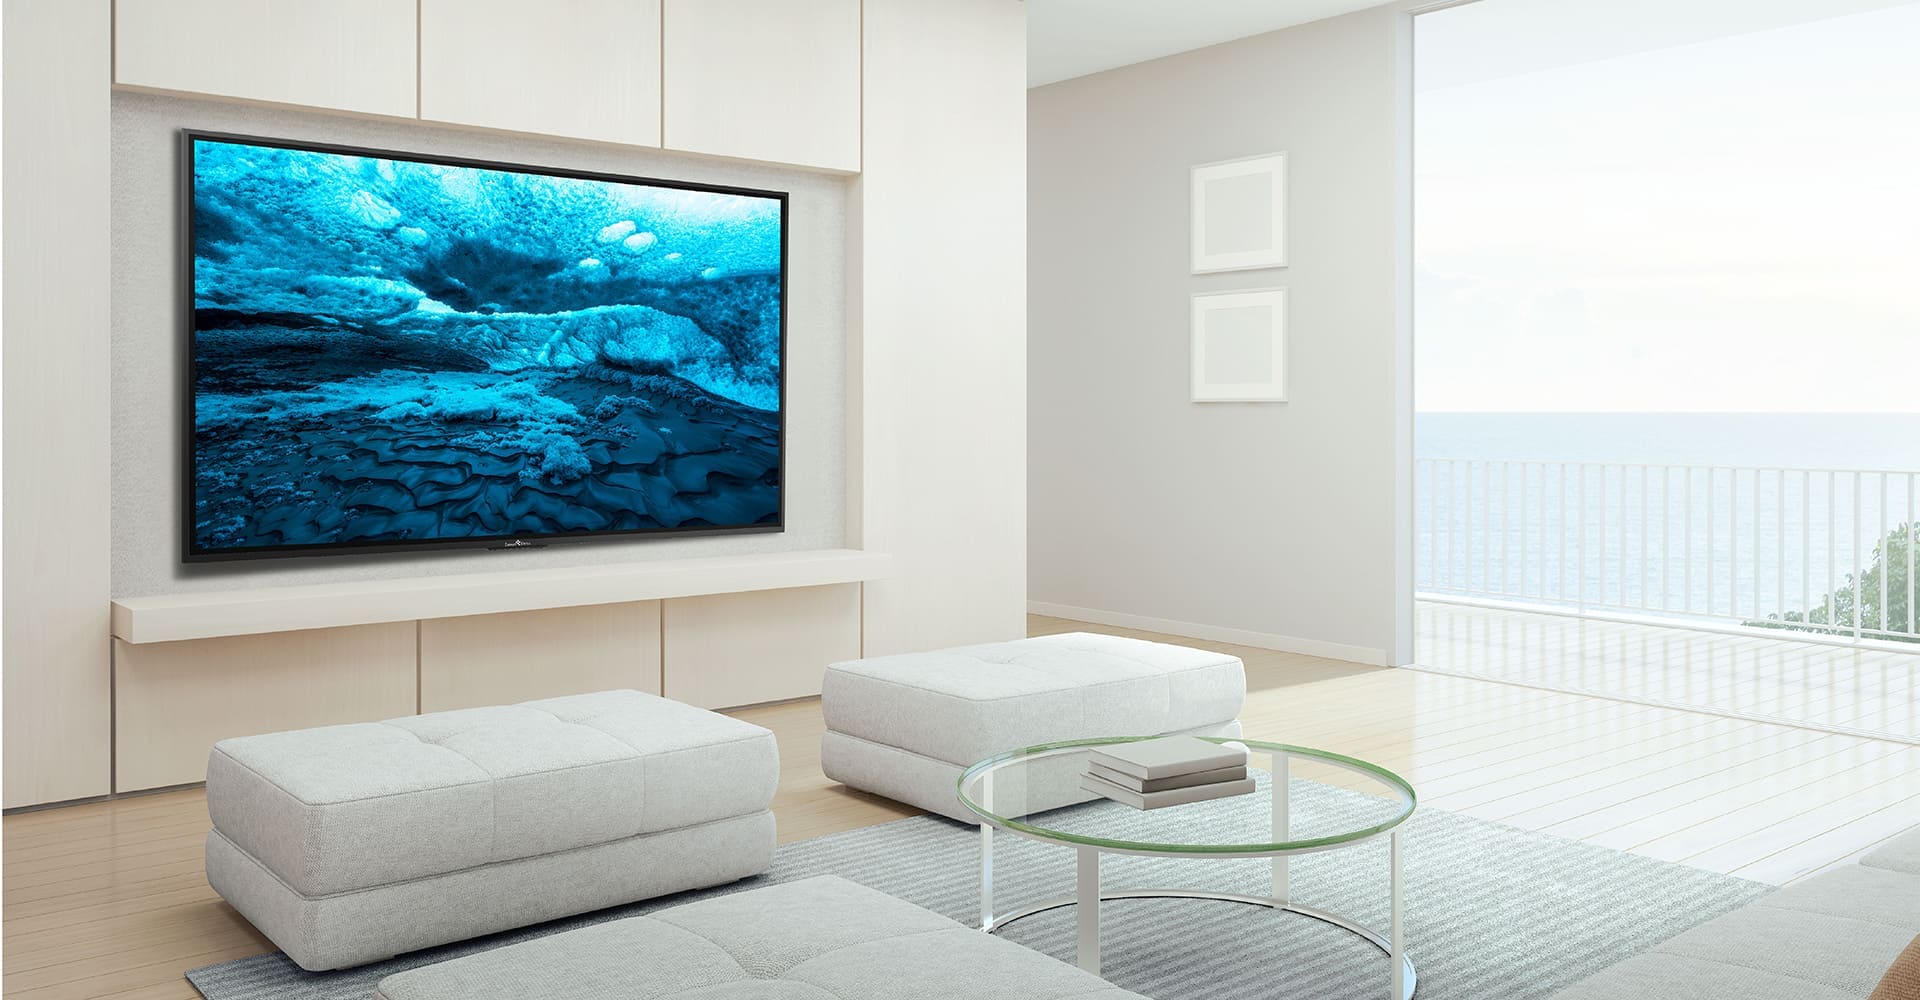 65 E1 4K Ultra HD Smart TV